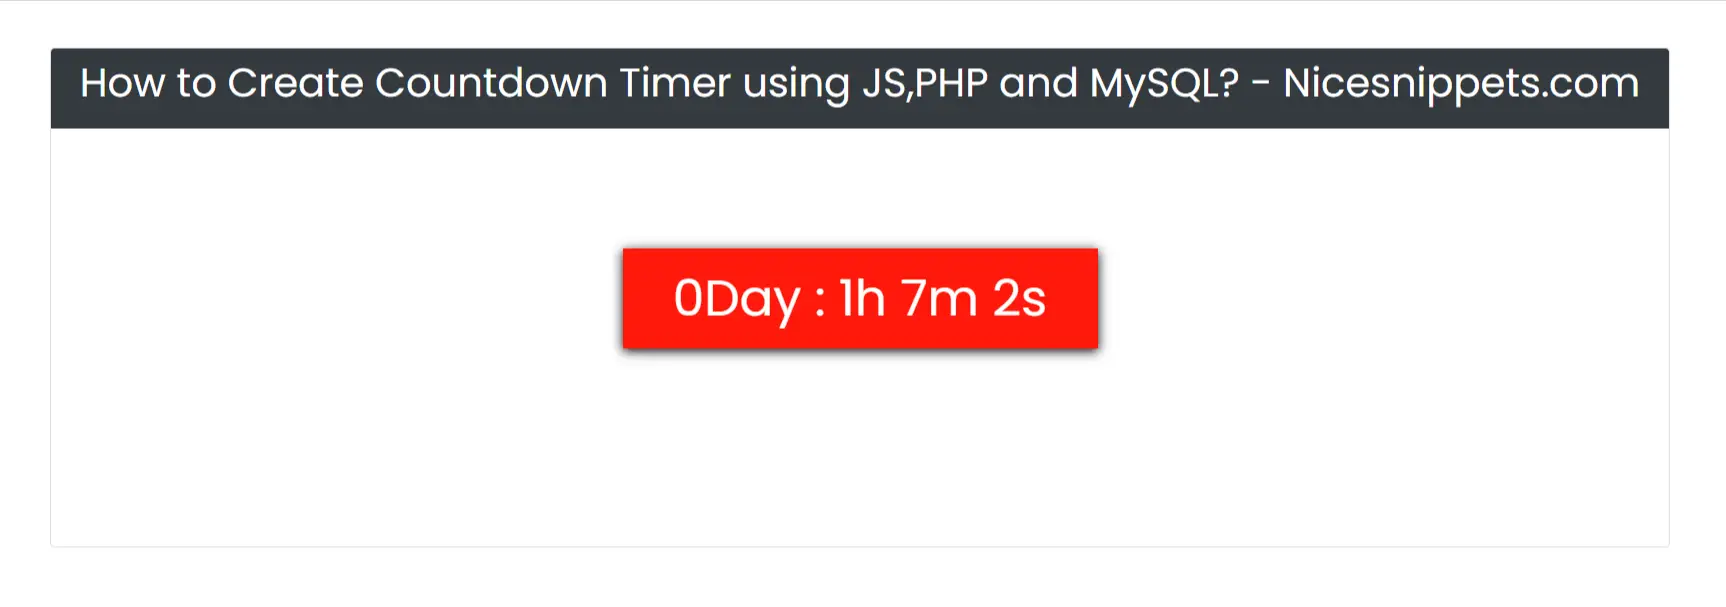 Burma Moderne Geologi How to Create Countdown Timer using JS,PHP and MySQL?